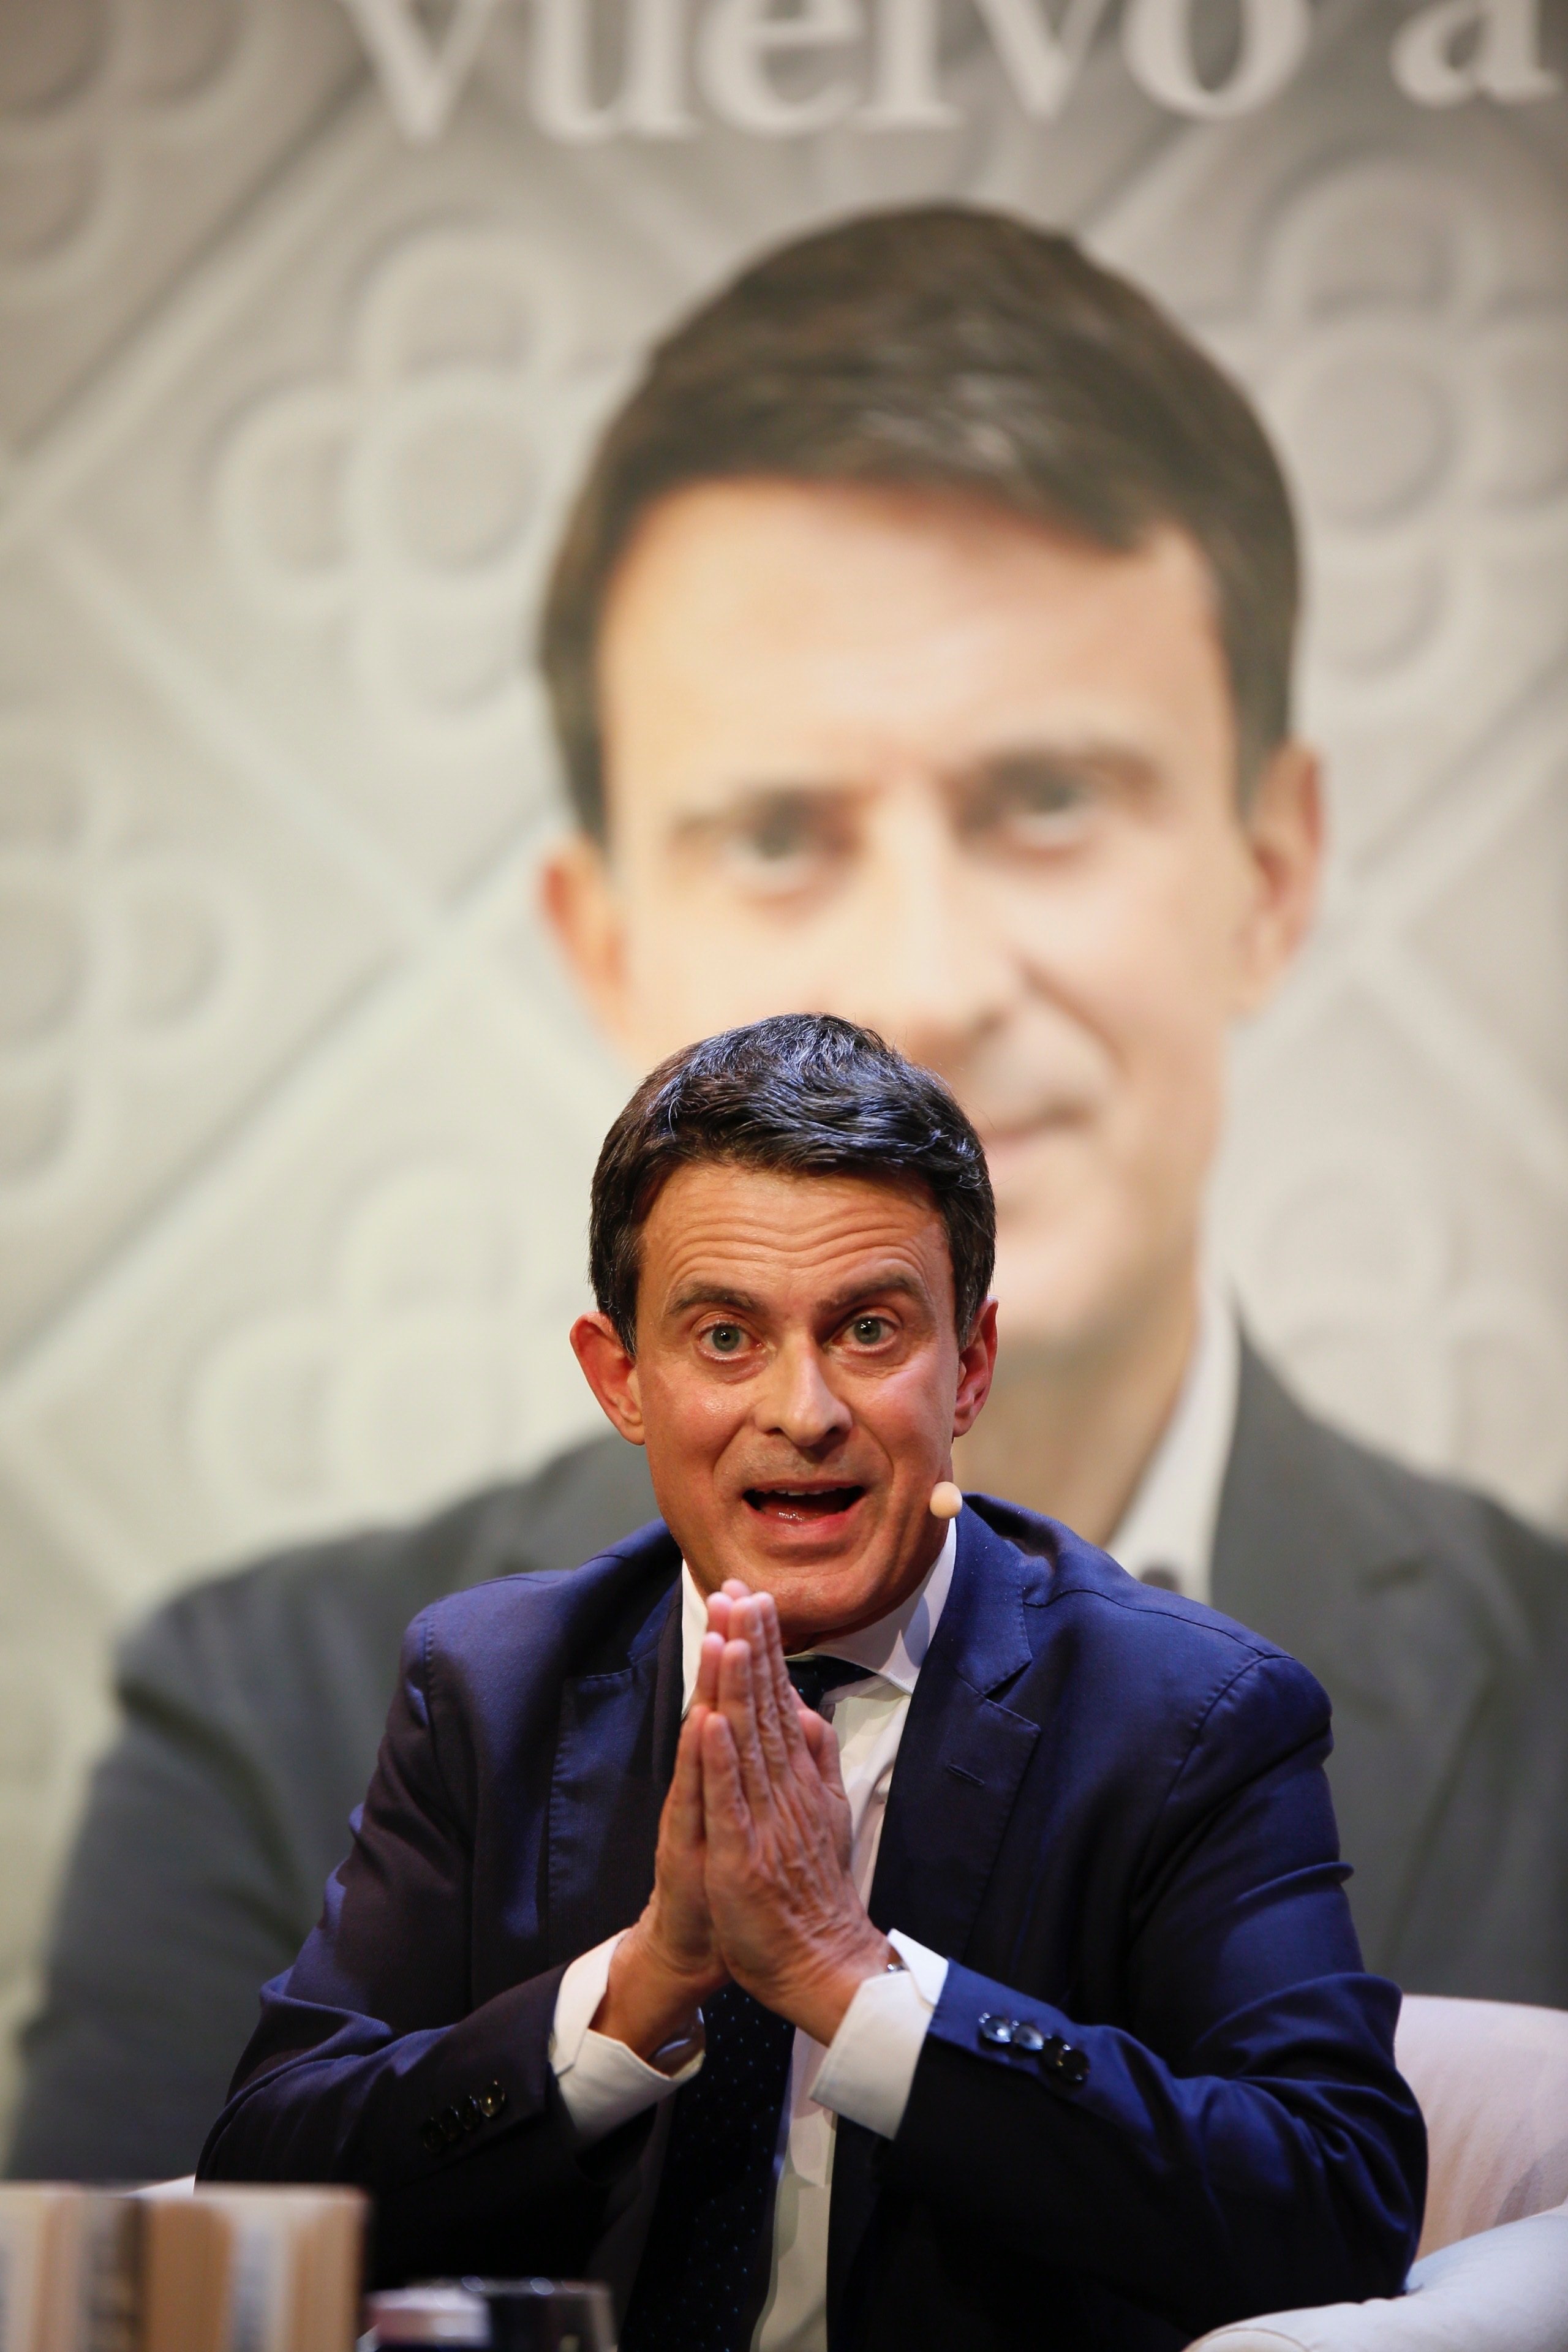 La red se burla de las costumbres dominicales de Manuel Valls